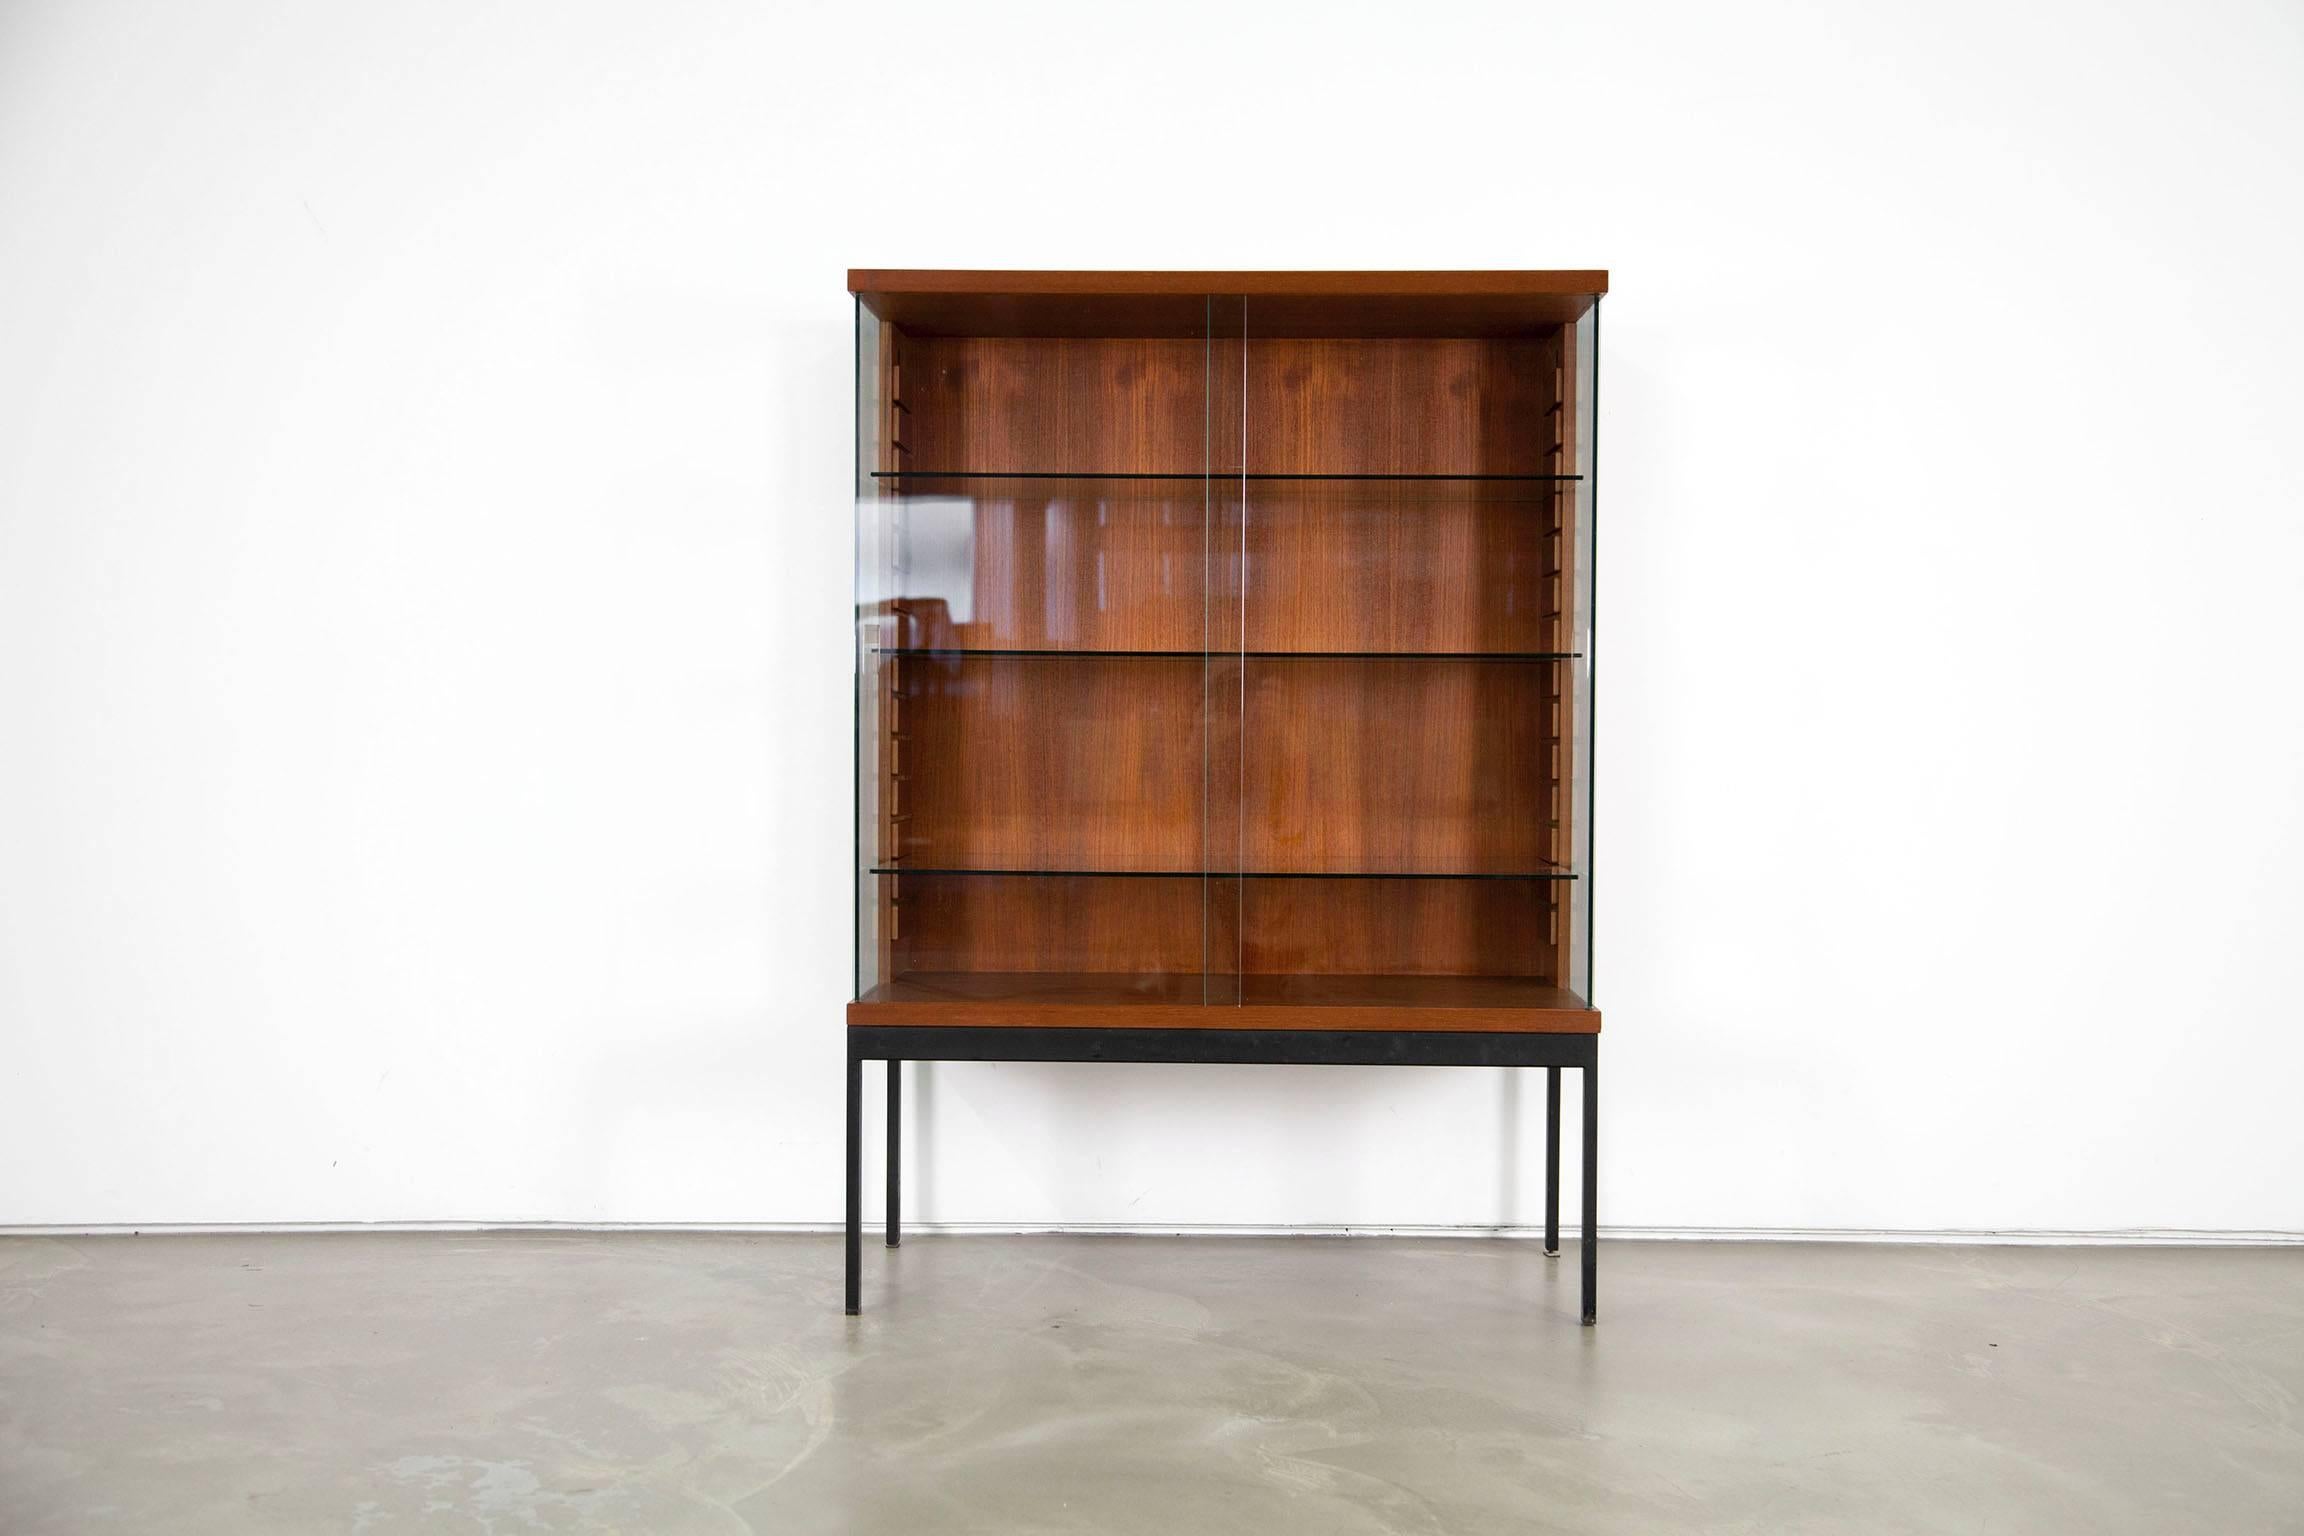 Architectural display cabinet designed by Dieter Waeckerlin. The cabinet is veneered with teakwood.